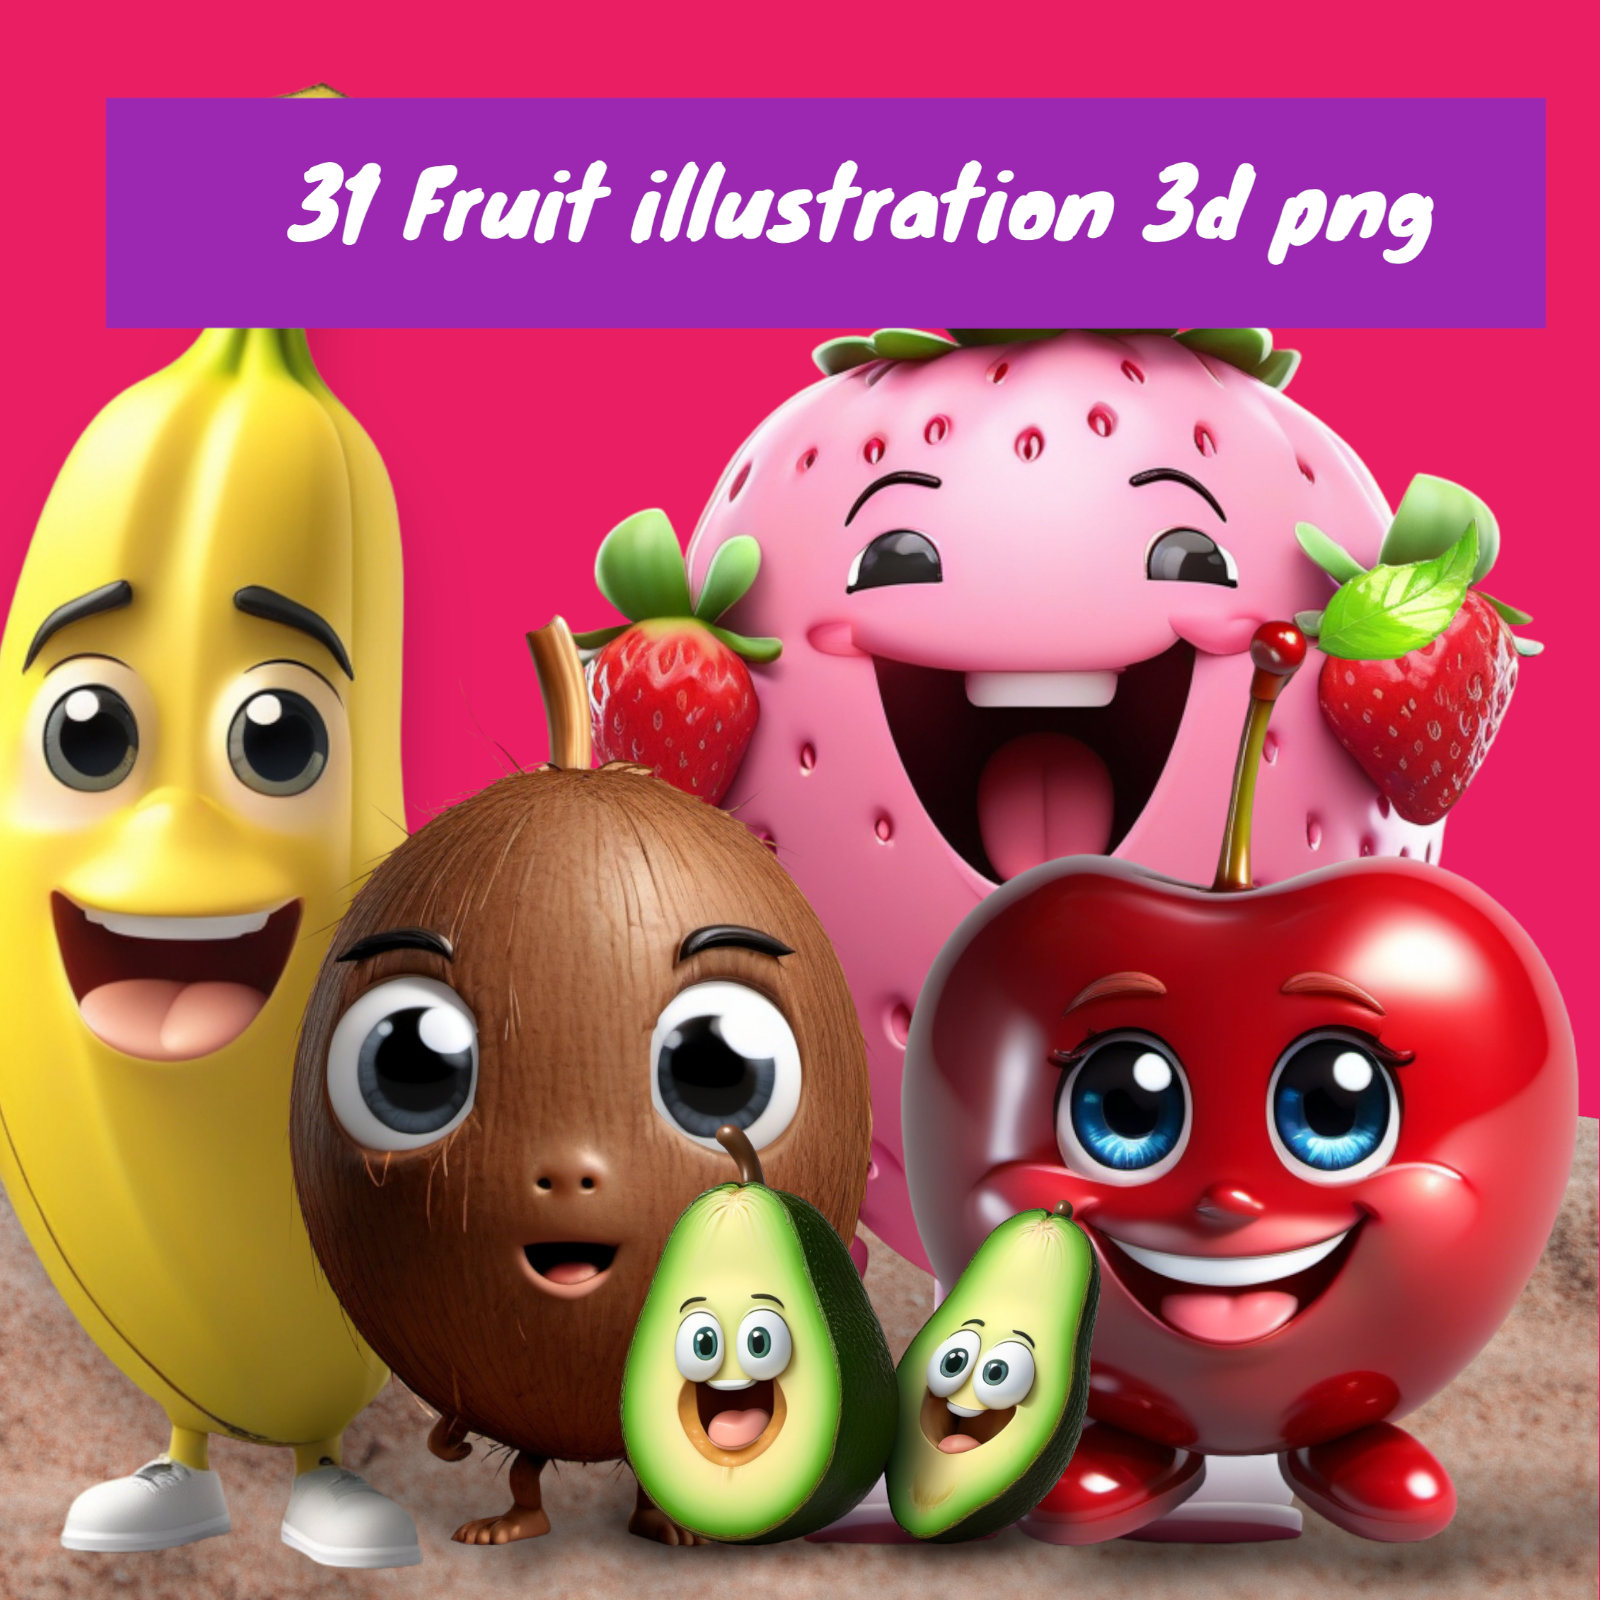 31 Fruit illustration 3d png preview image.